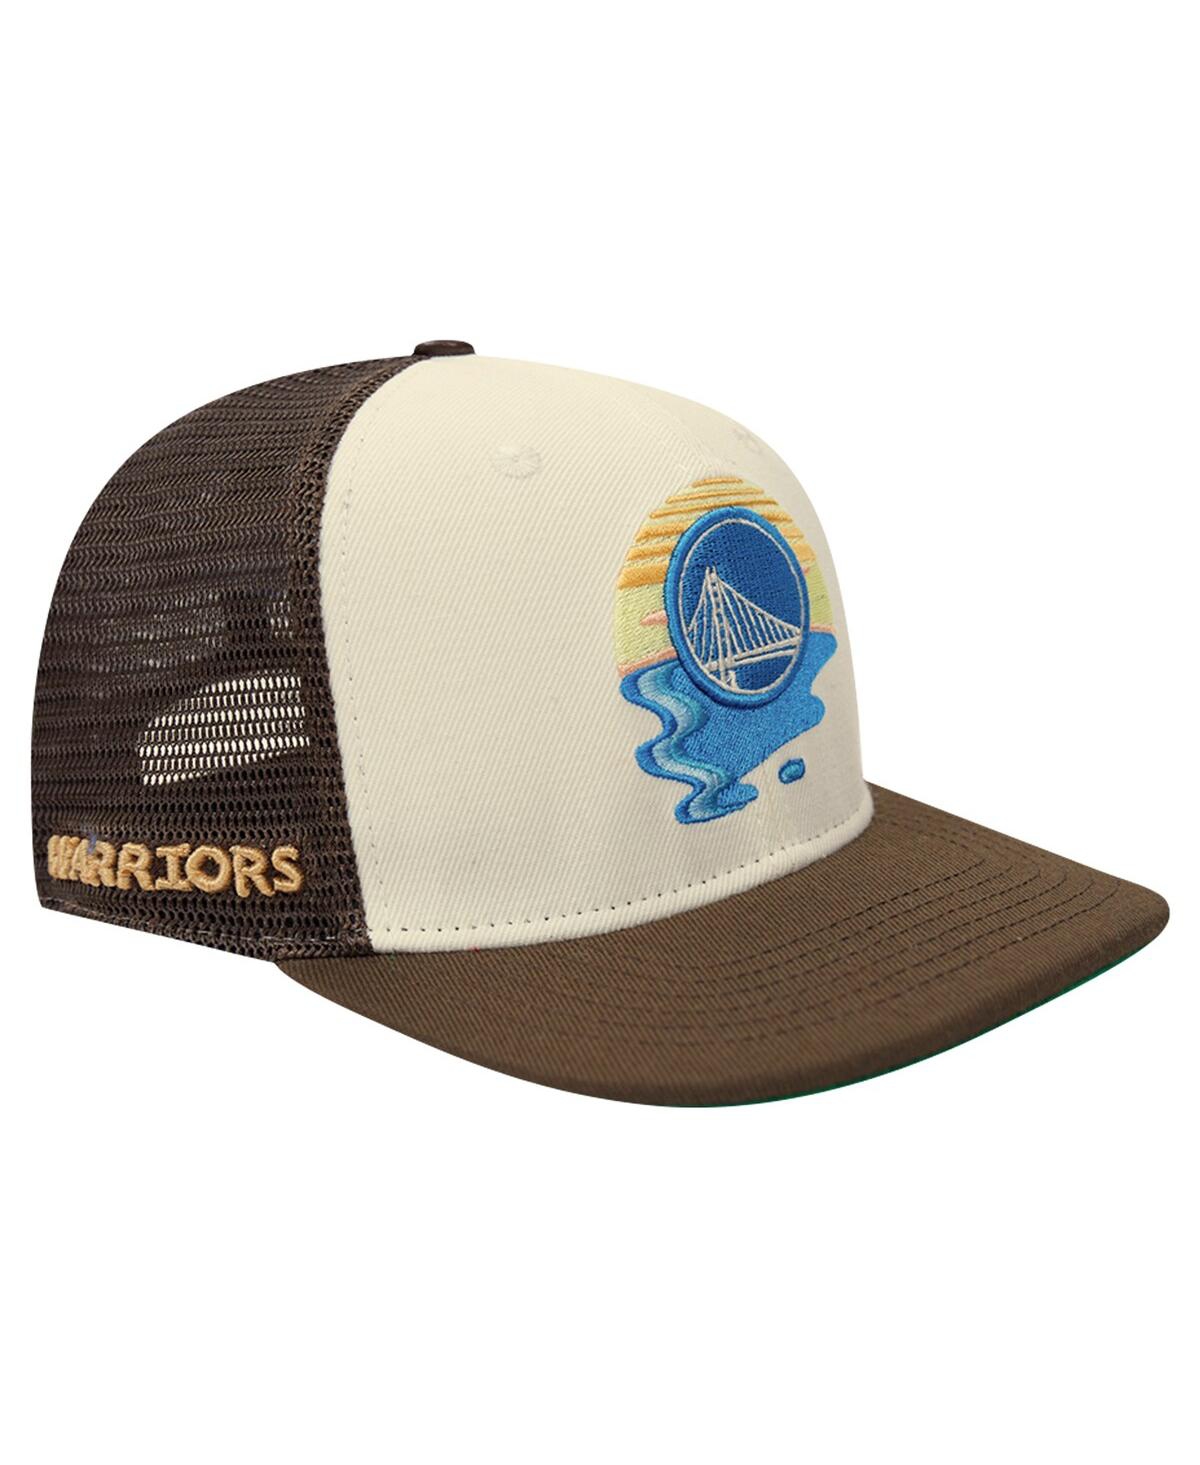 Men's Cream/Brown Golden State Warriors Glint Sunset Snapback Hat - Cream, Brown